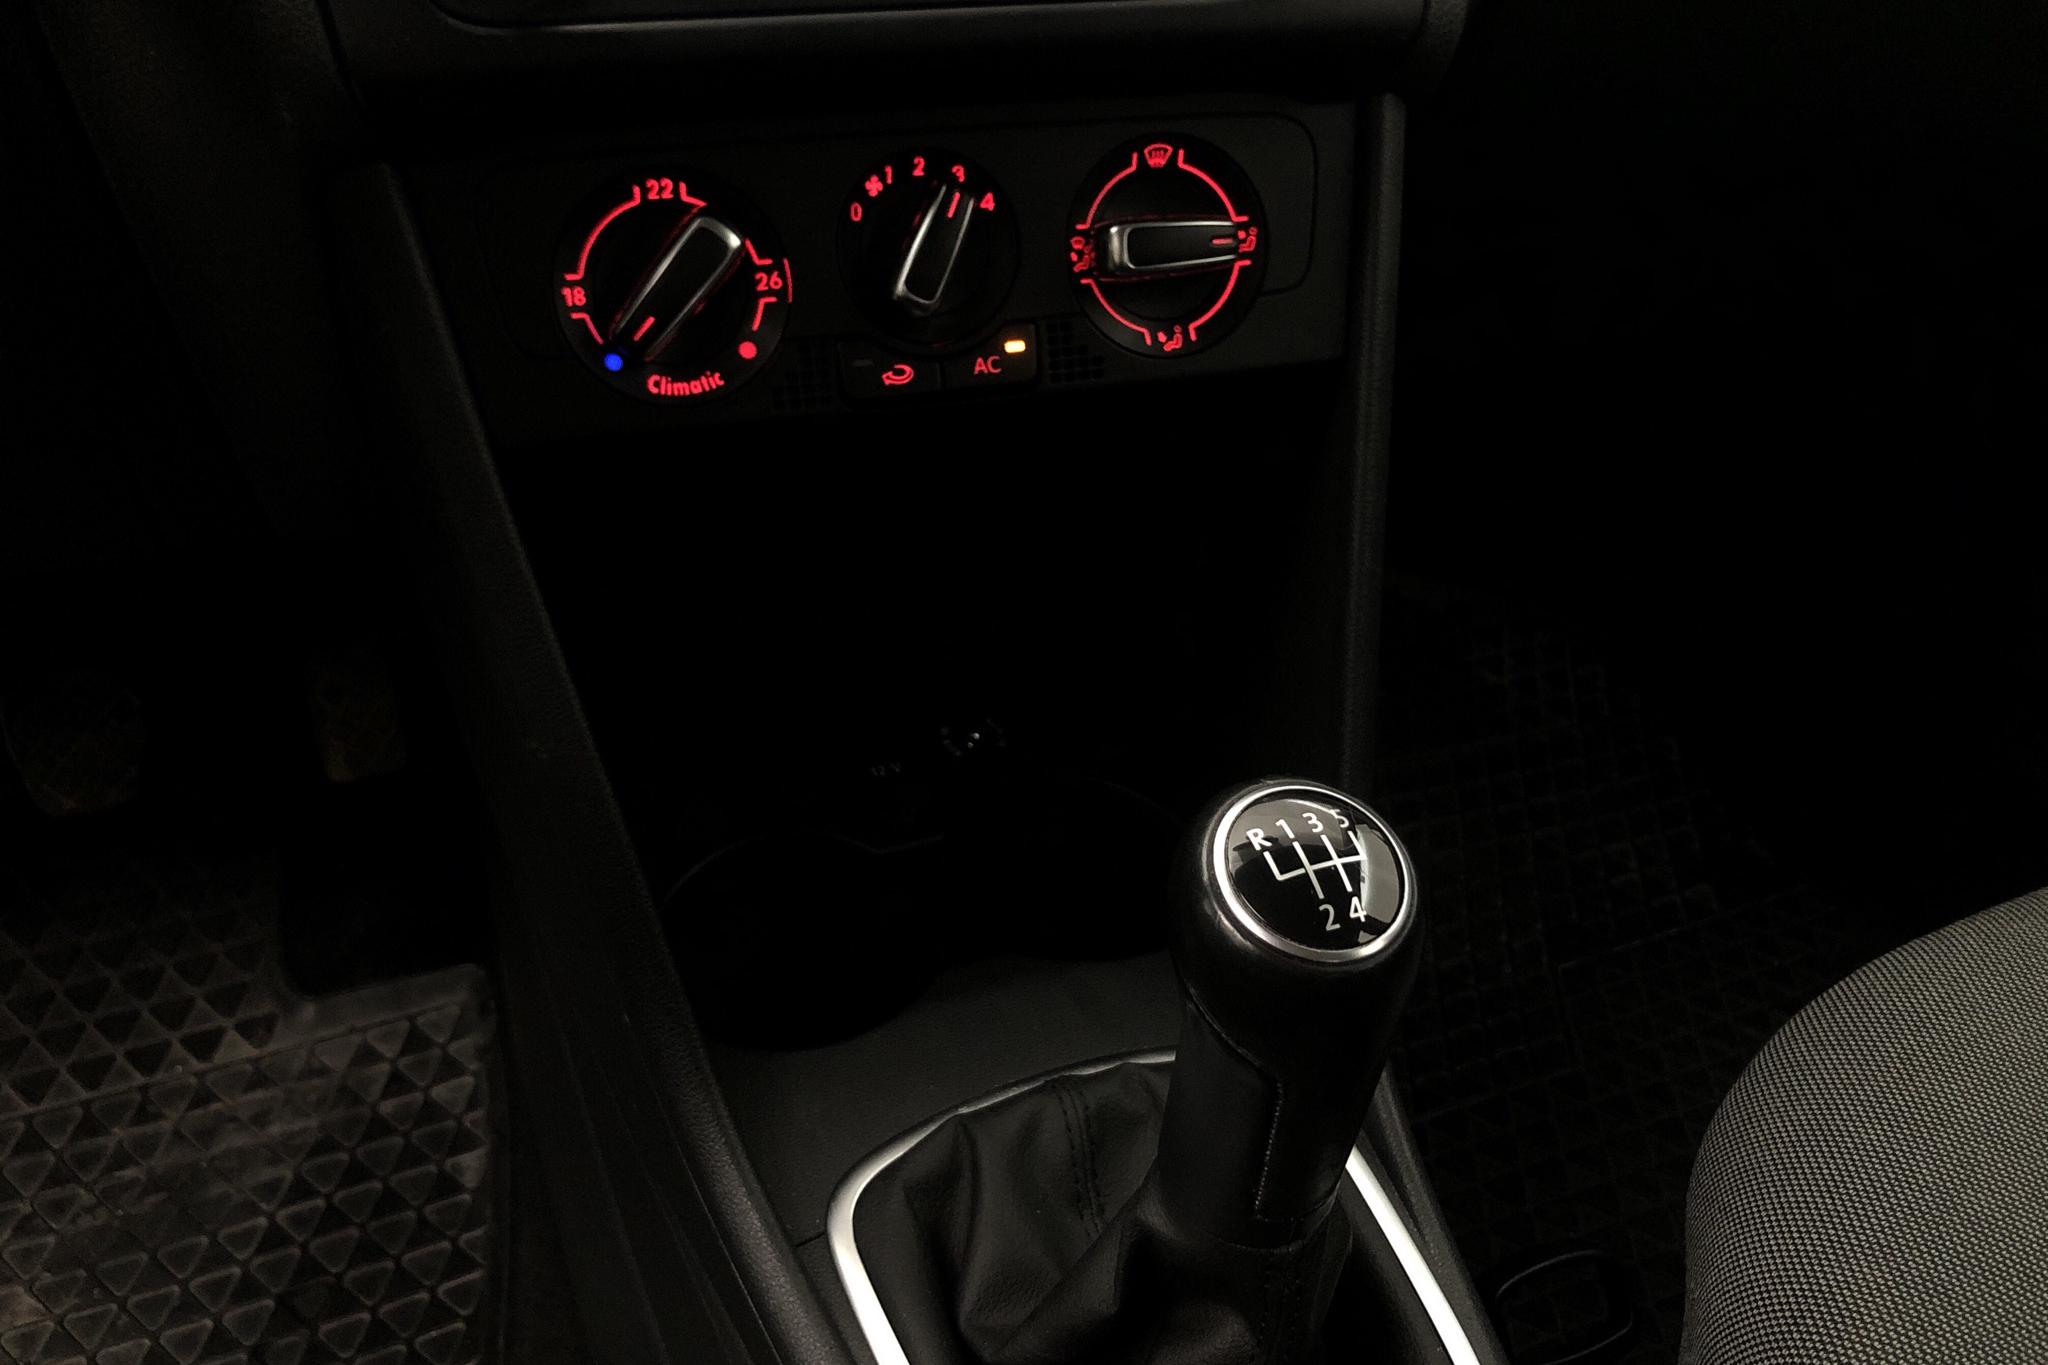 VW Polo 1.4 5dr (85hk) - 12 432 mil - Manuell - röd - 2011